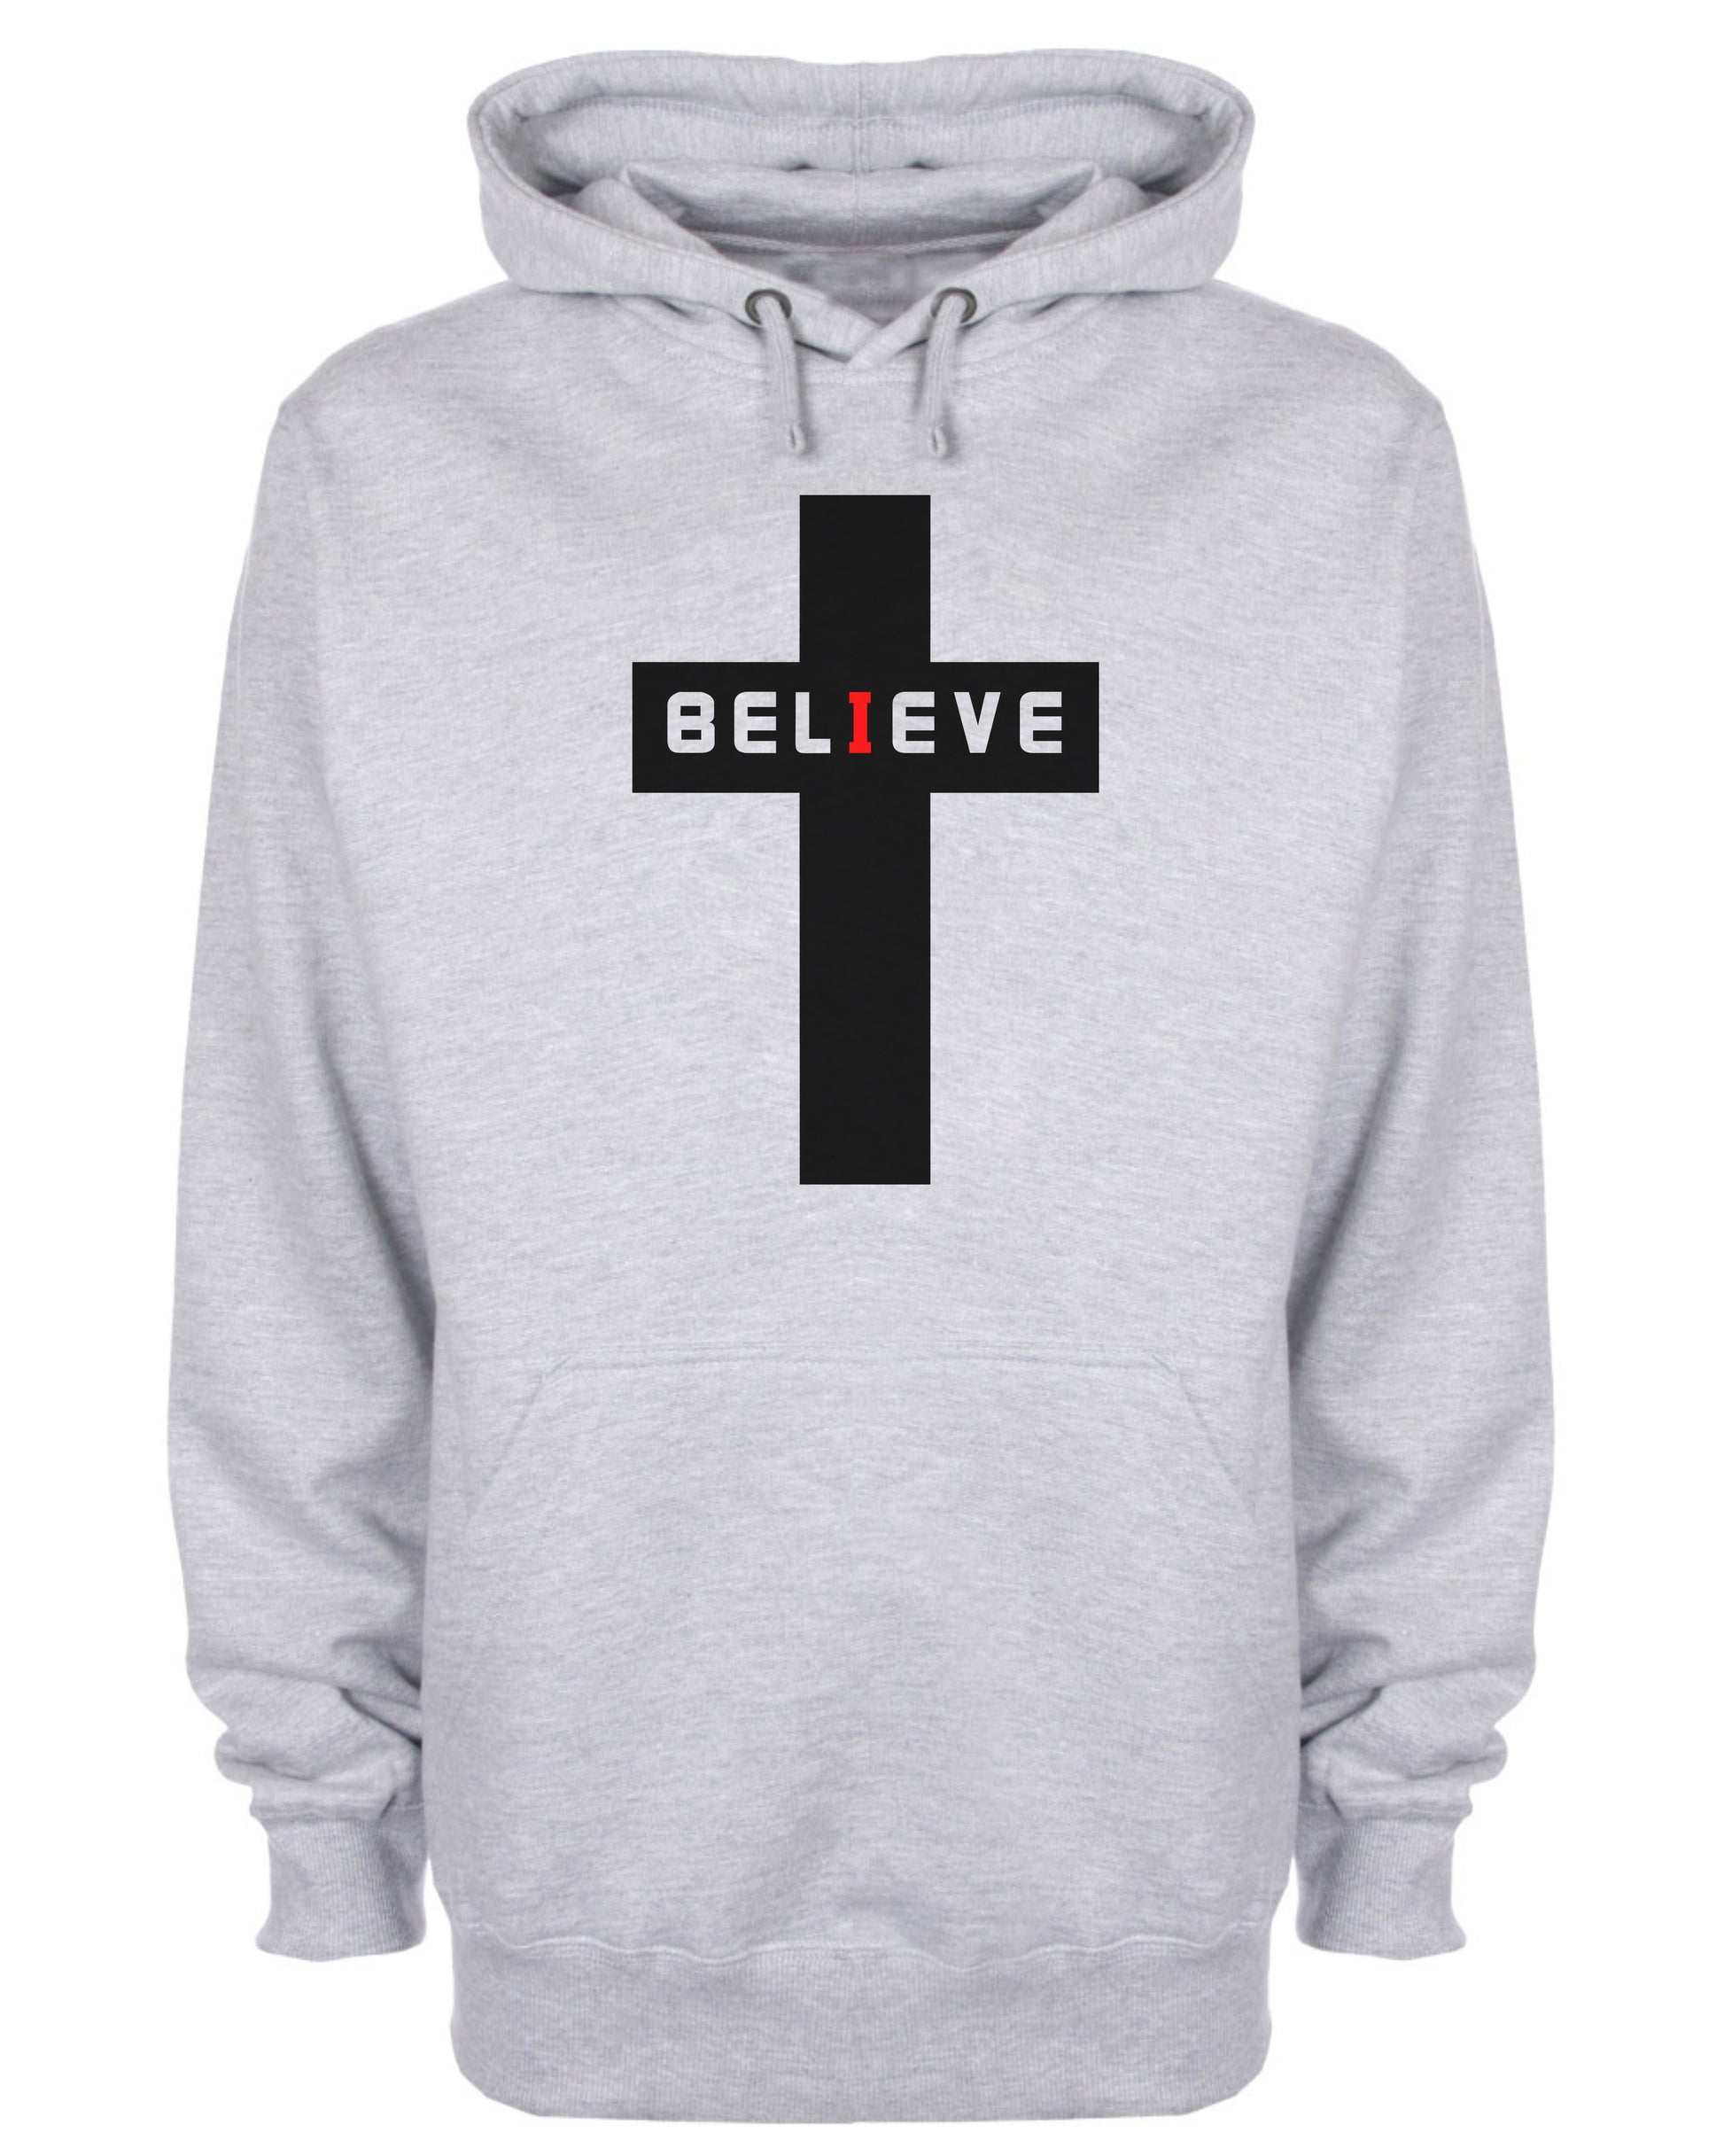 Believe Hoodie Christian Cross Jesus Christ Sweatshirt